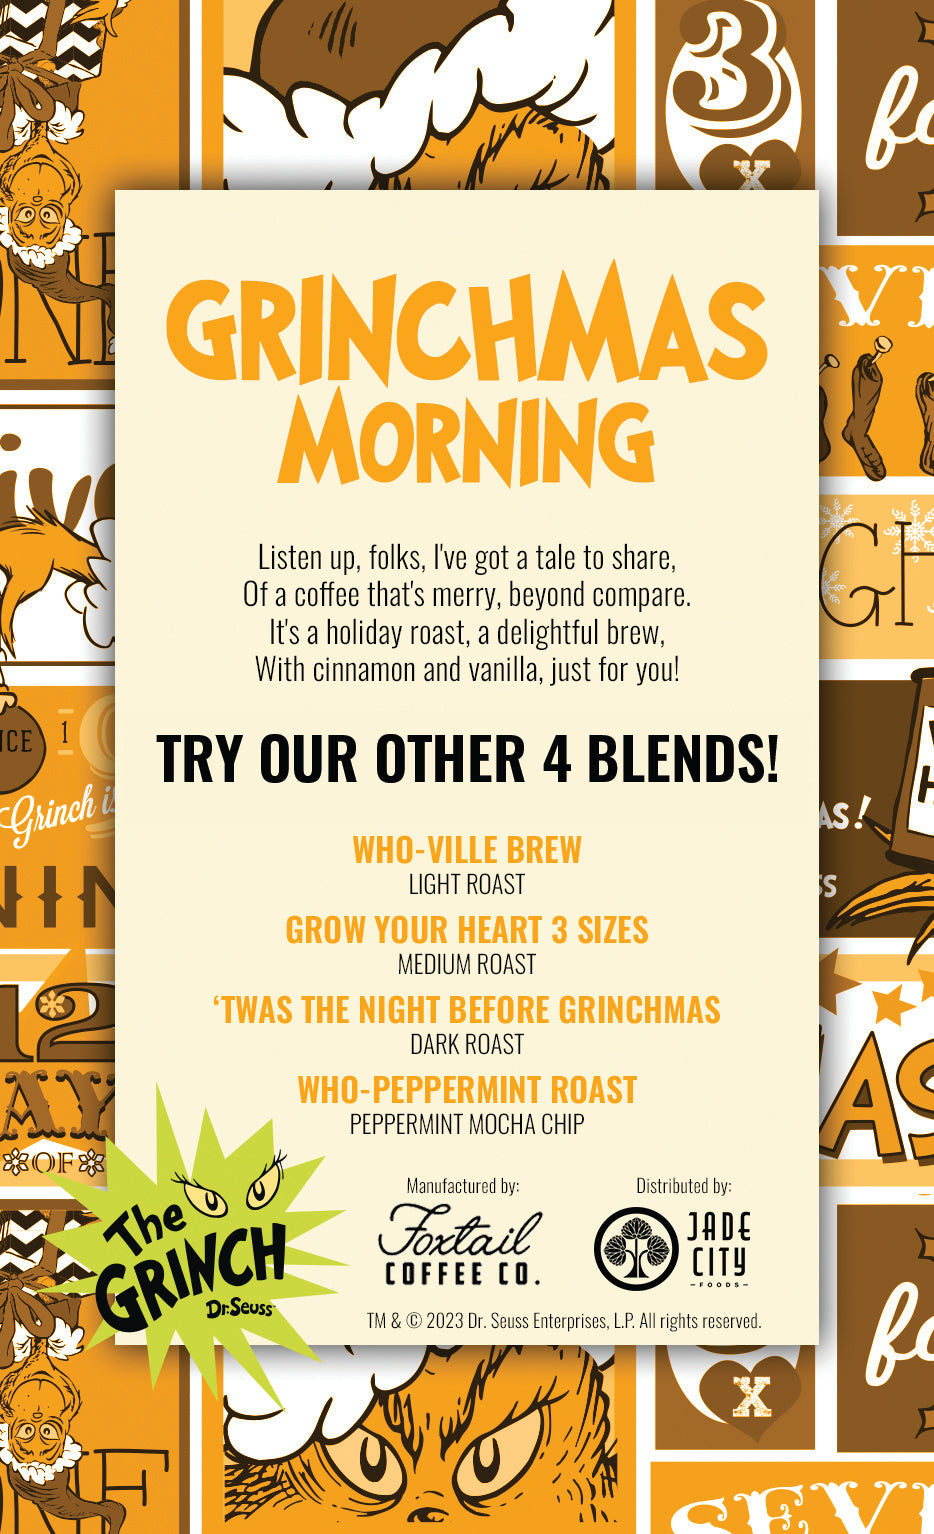 Grinchmas Morning : Cinnamon Toast Coffee